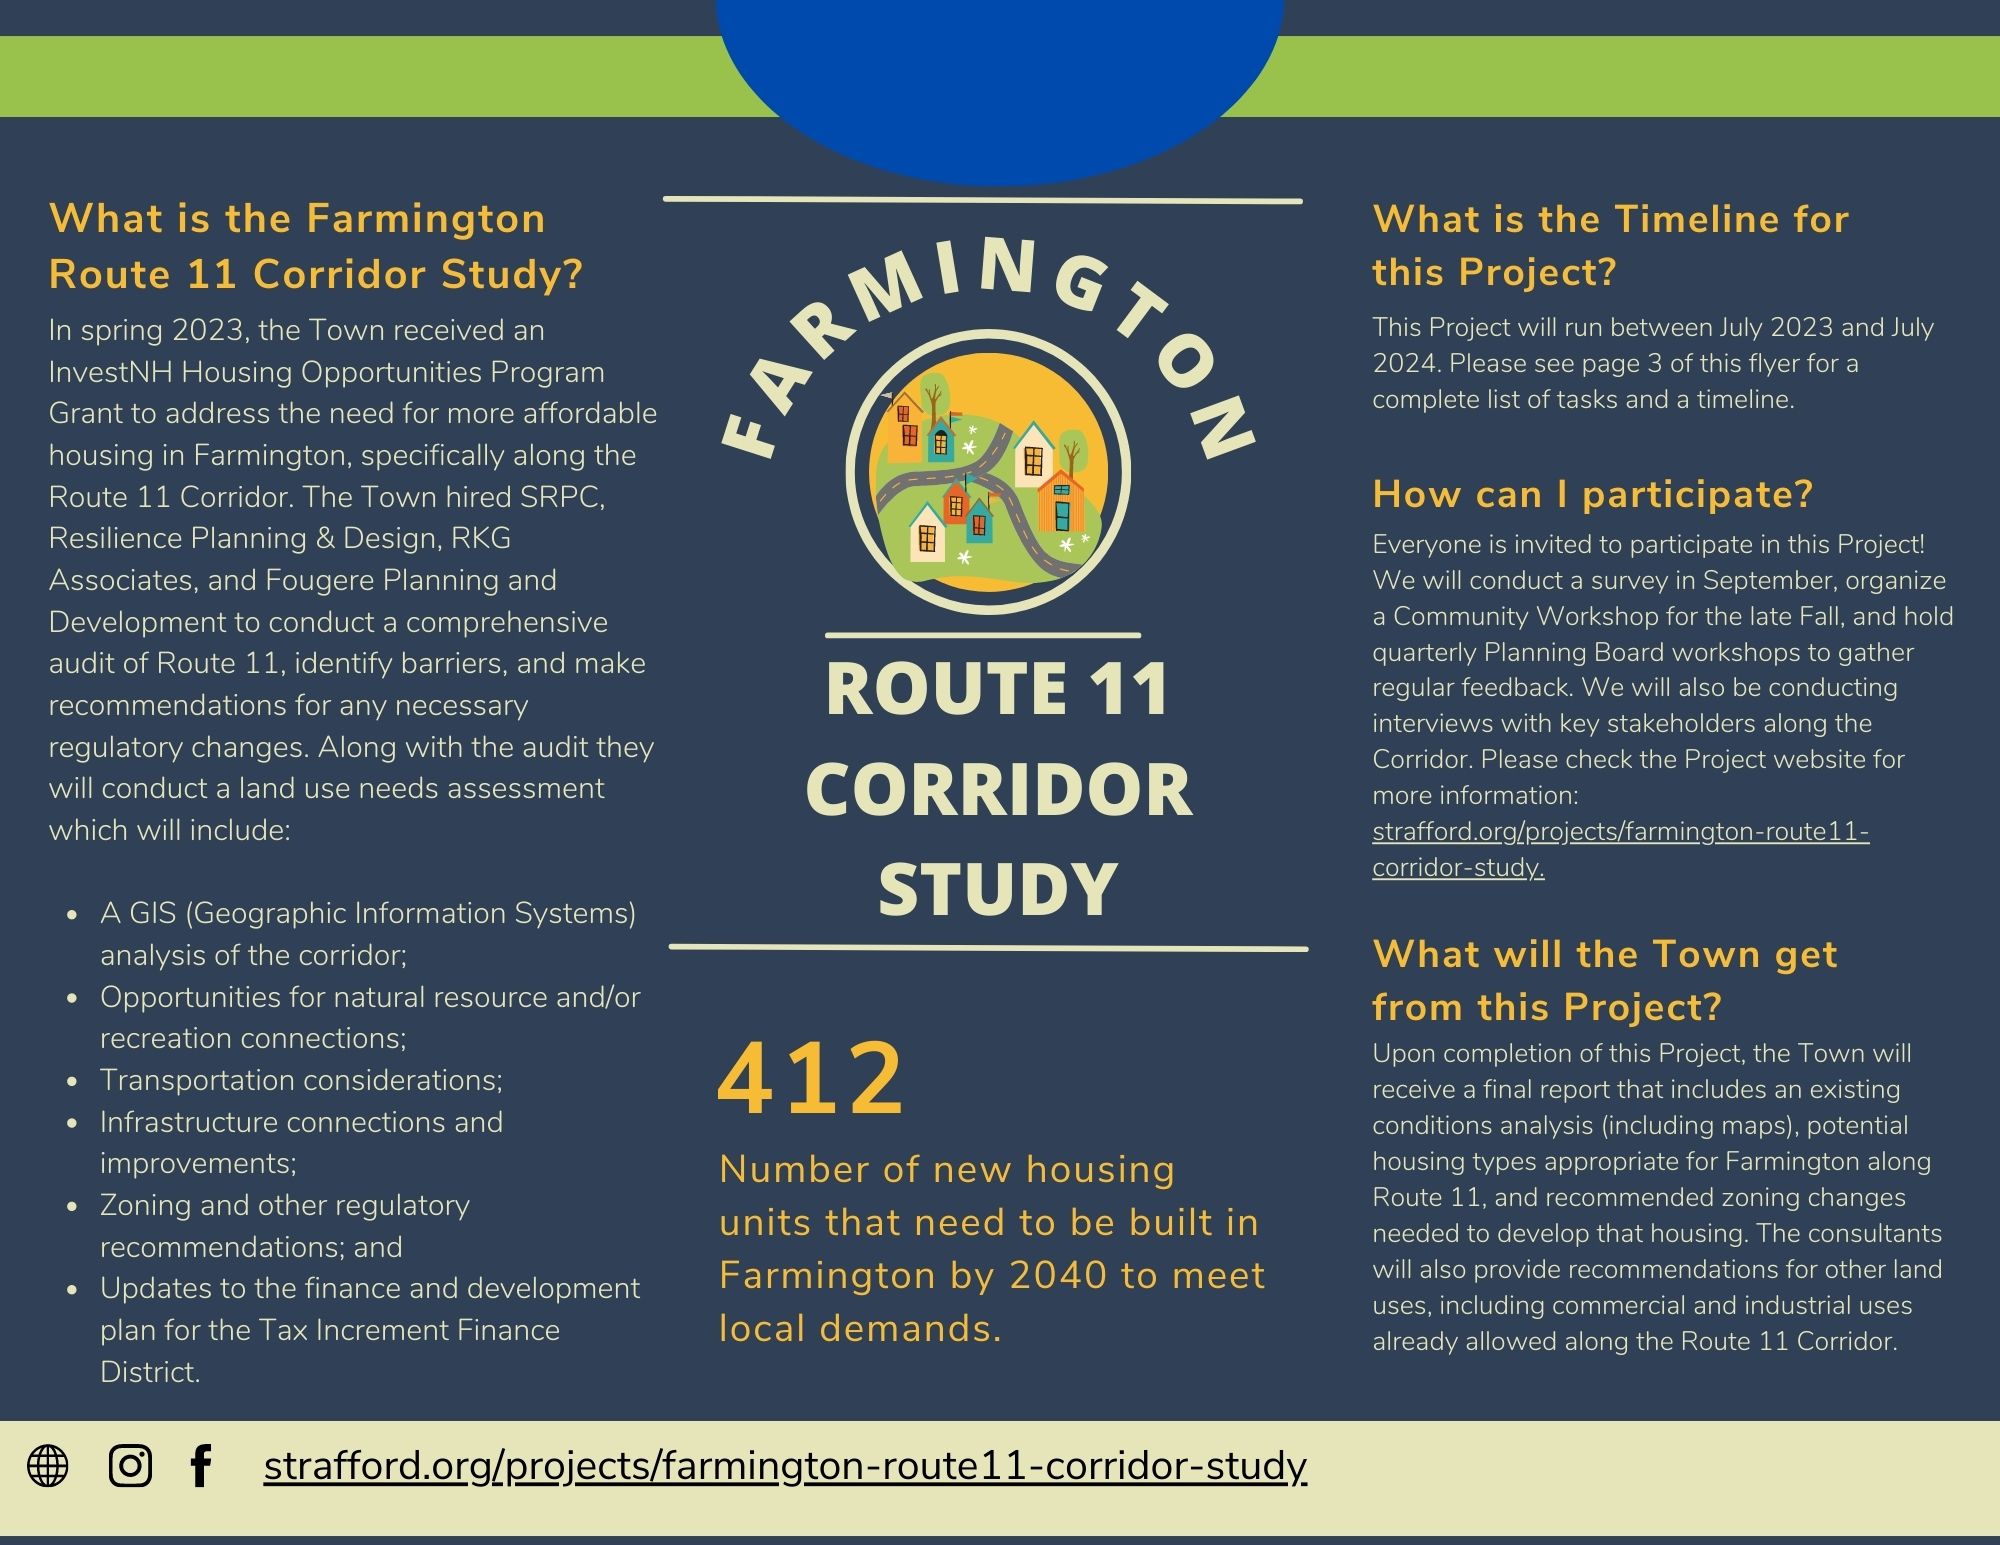 Farmington Route 11 Corridor Study handout image